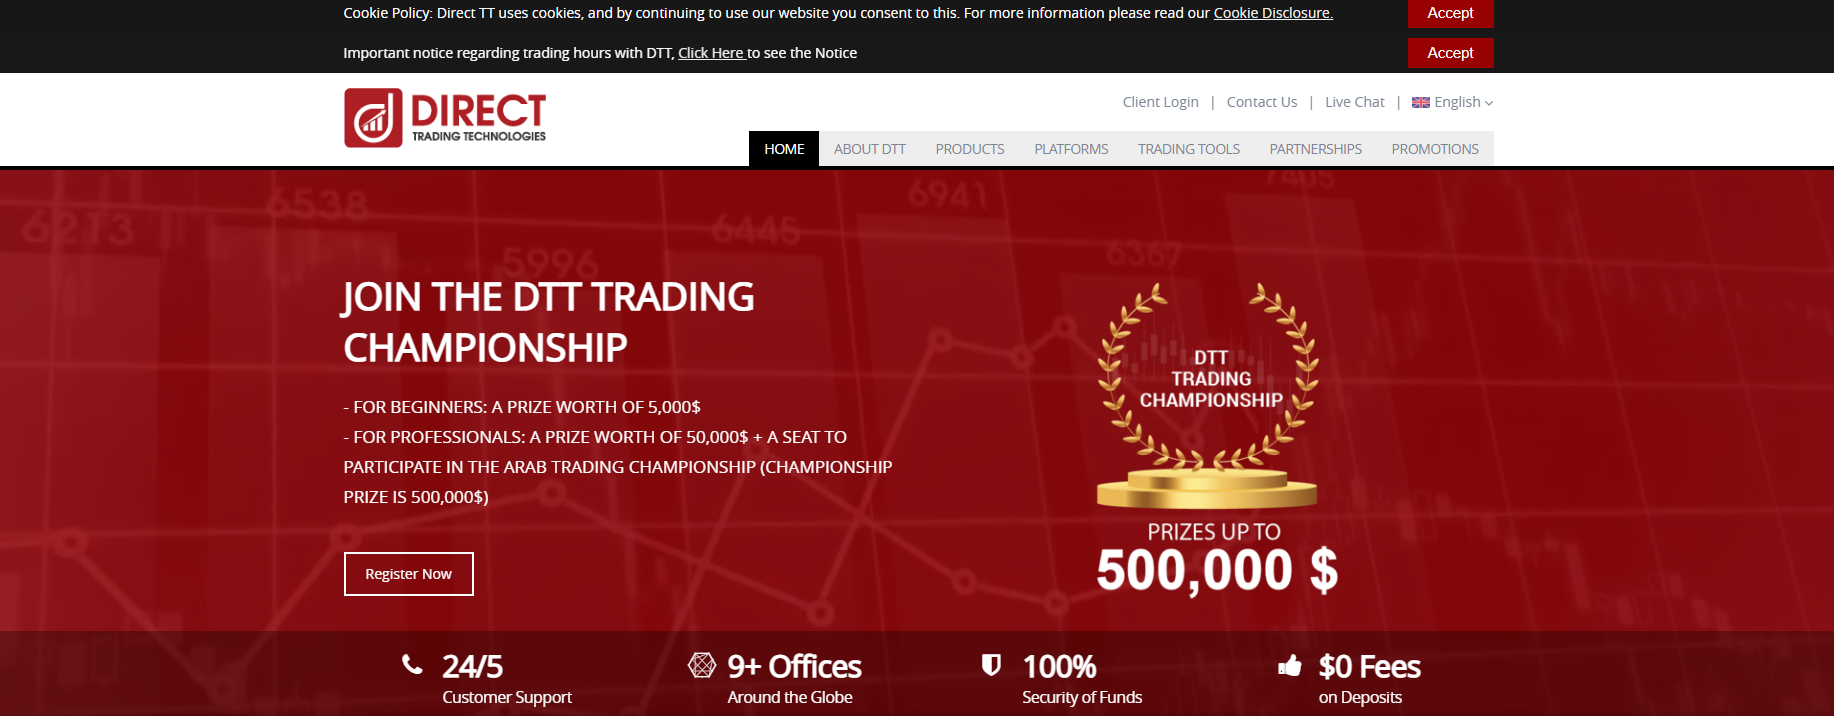 direct trading technologies официальный сайт